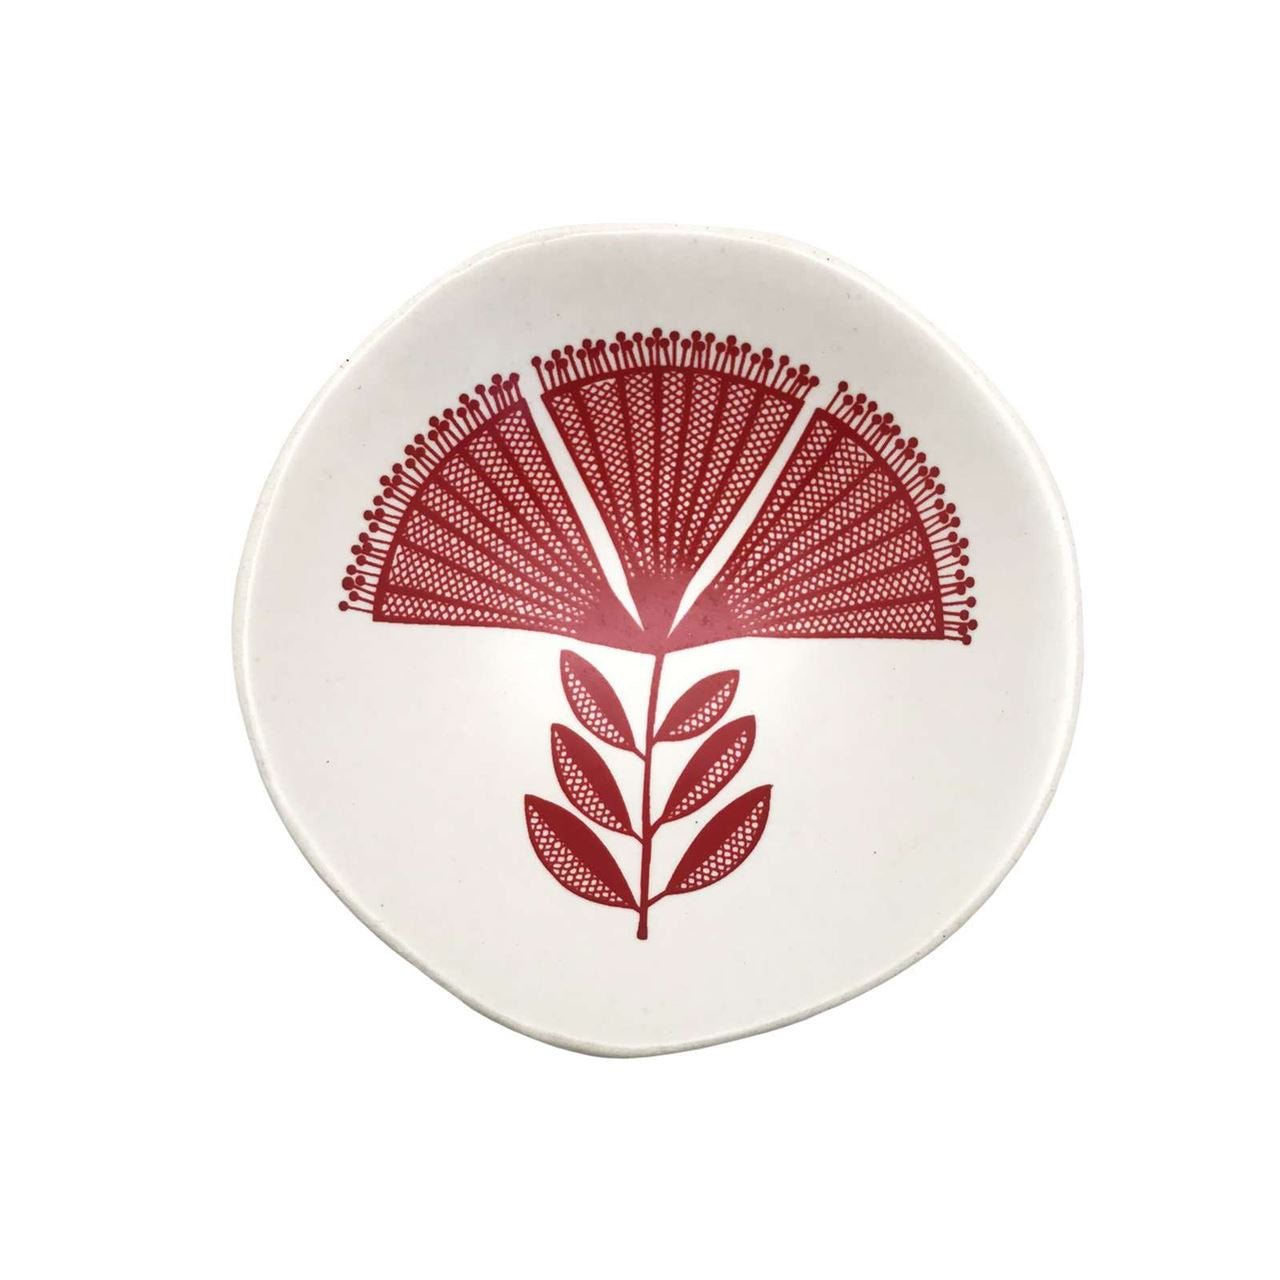 Porcelain Bowl, 7cm - Red Pohutukawa Lace on white